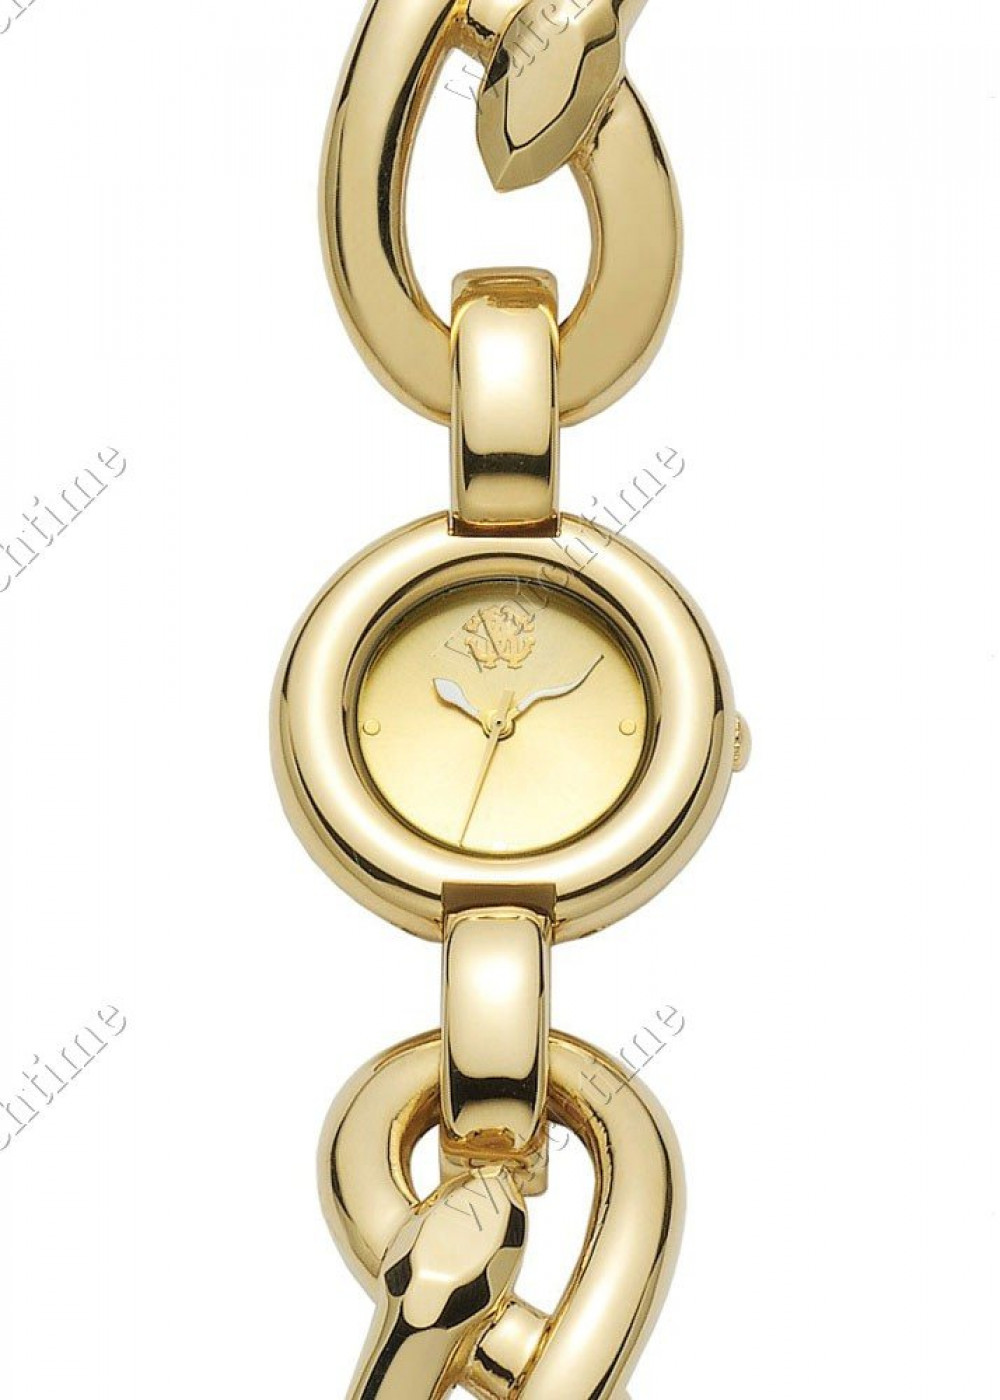 Zegarek firmy Roberto Cavalli Timewear, model Axelis